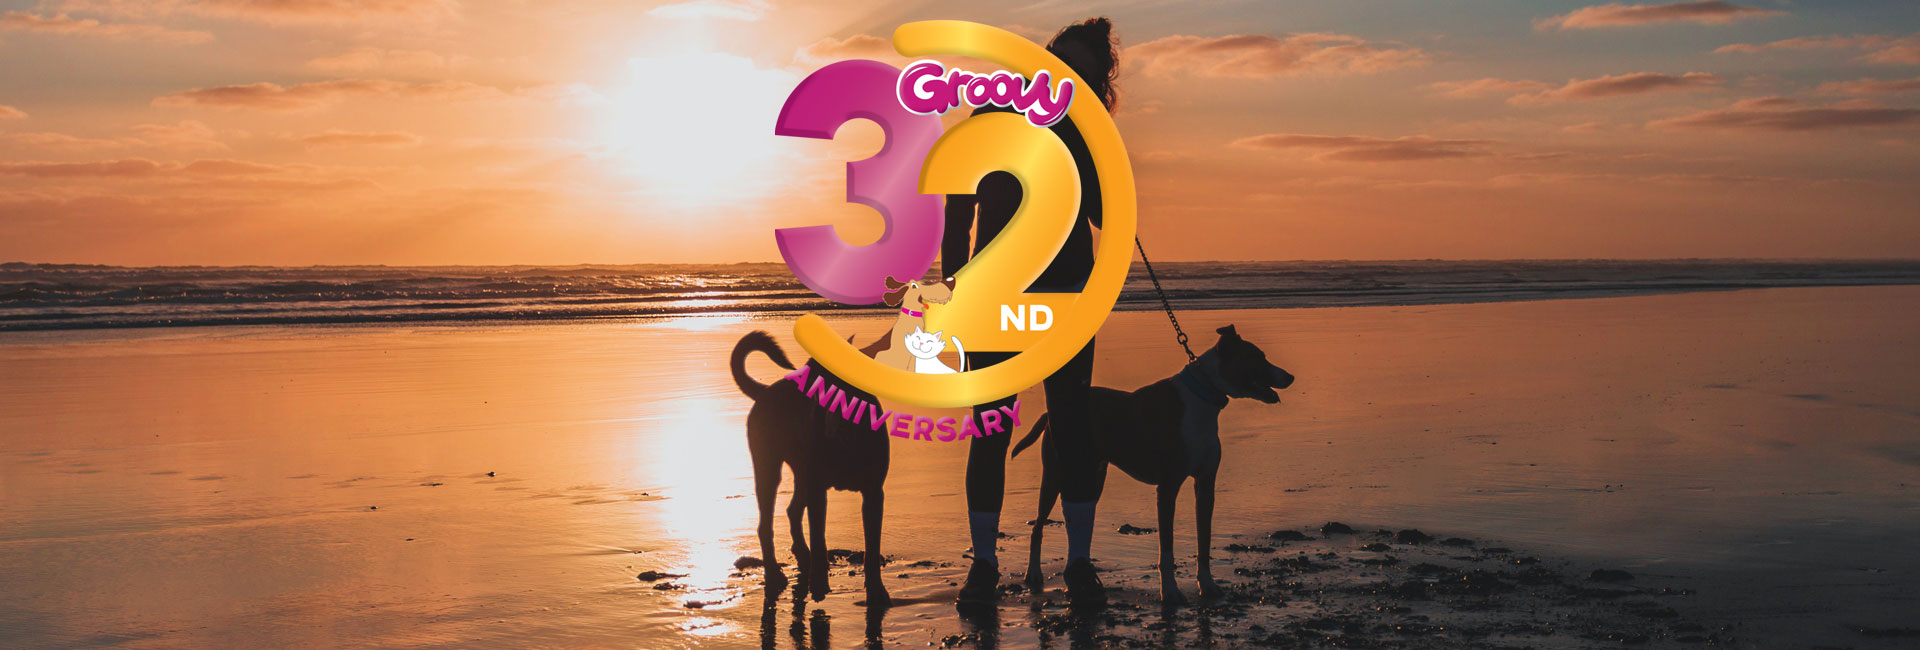 Groovy 32nd Anniversary